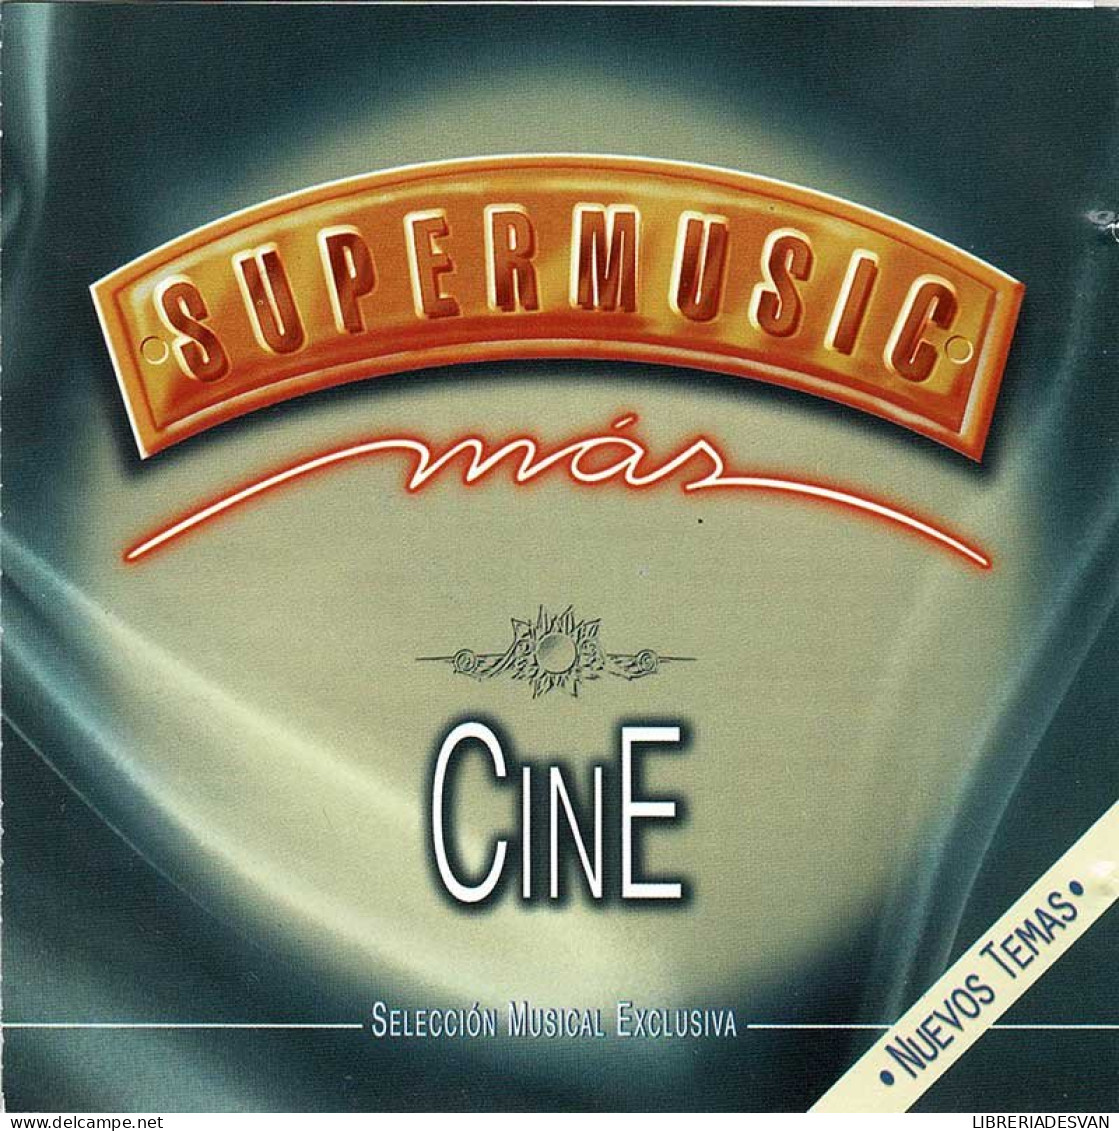 Supermusic Más Cine. CD - Soundtracks, Film Music